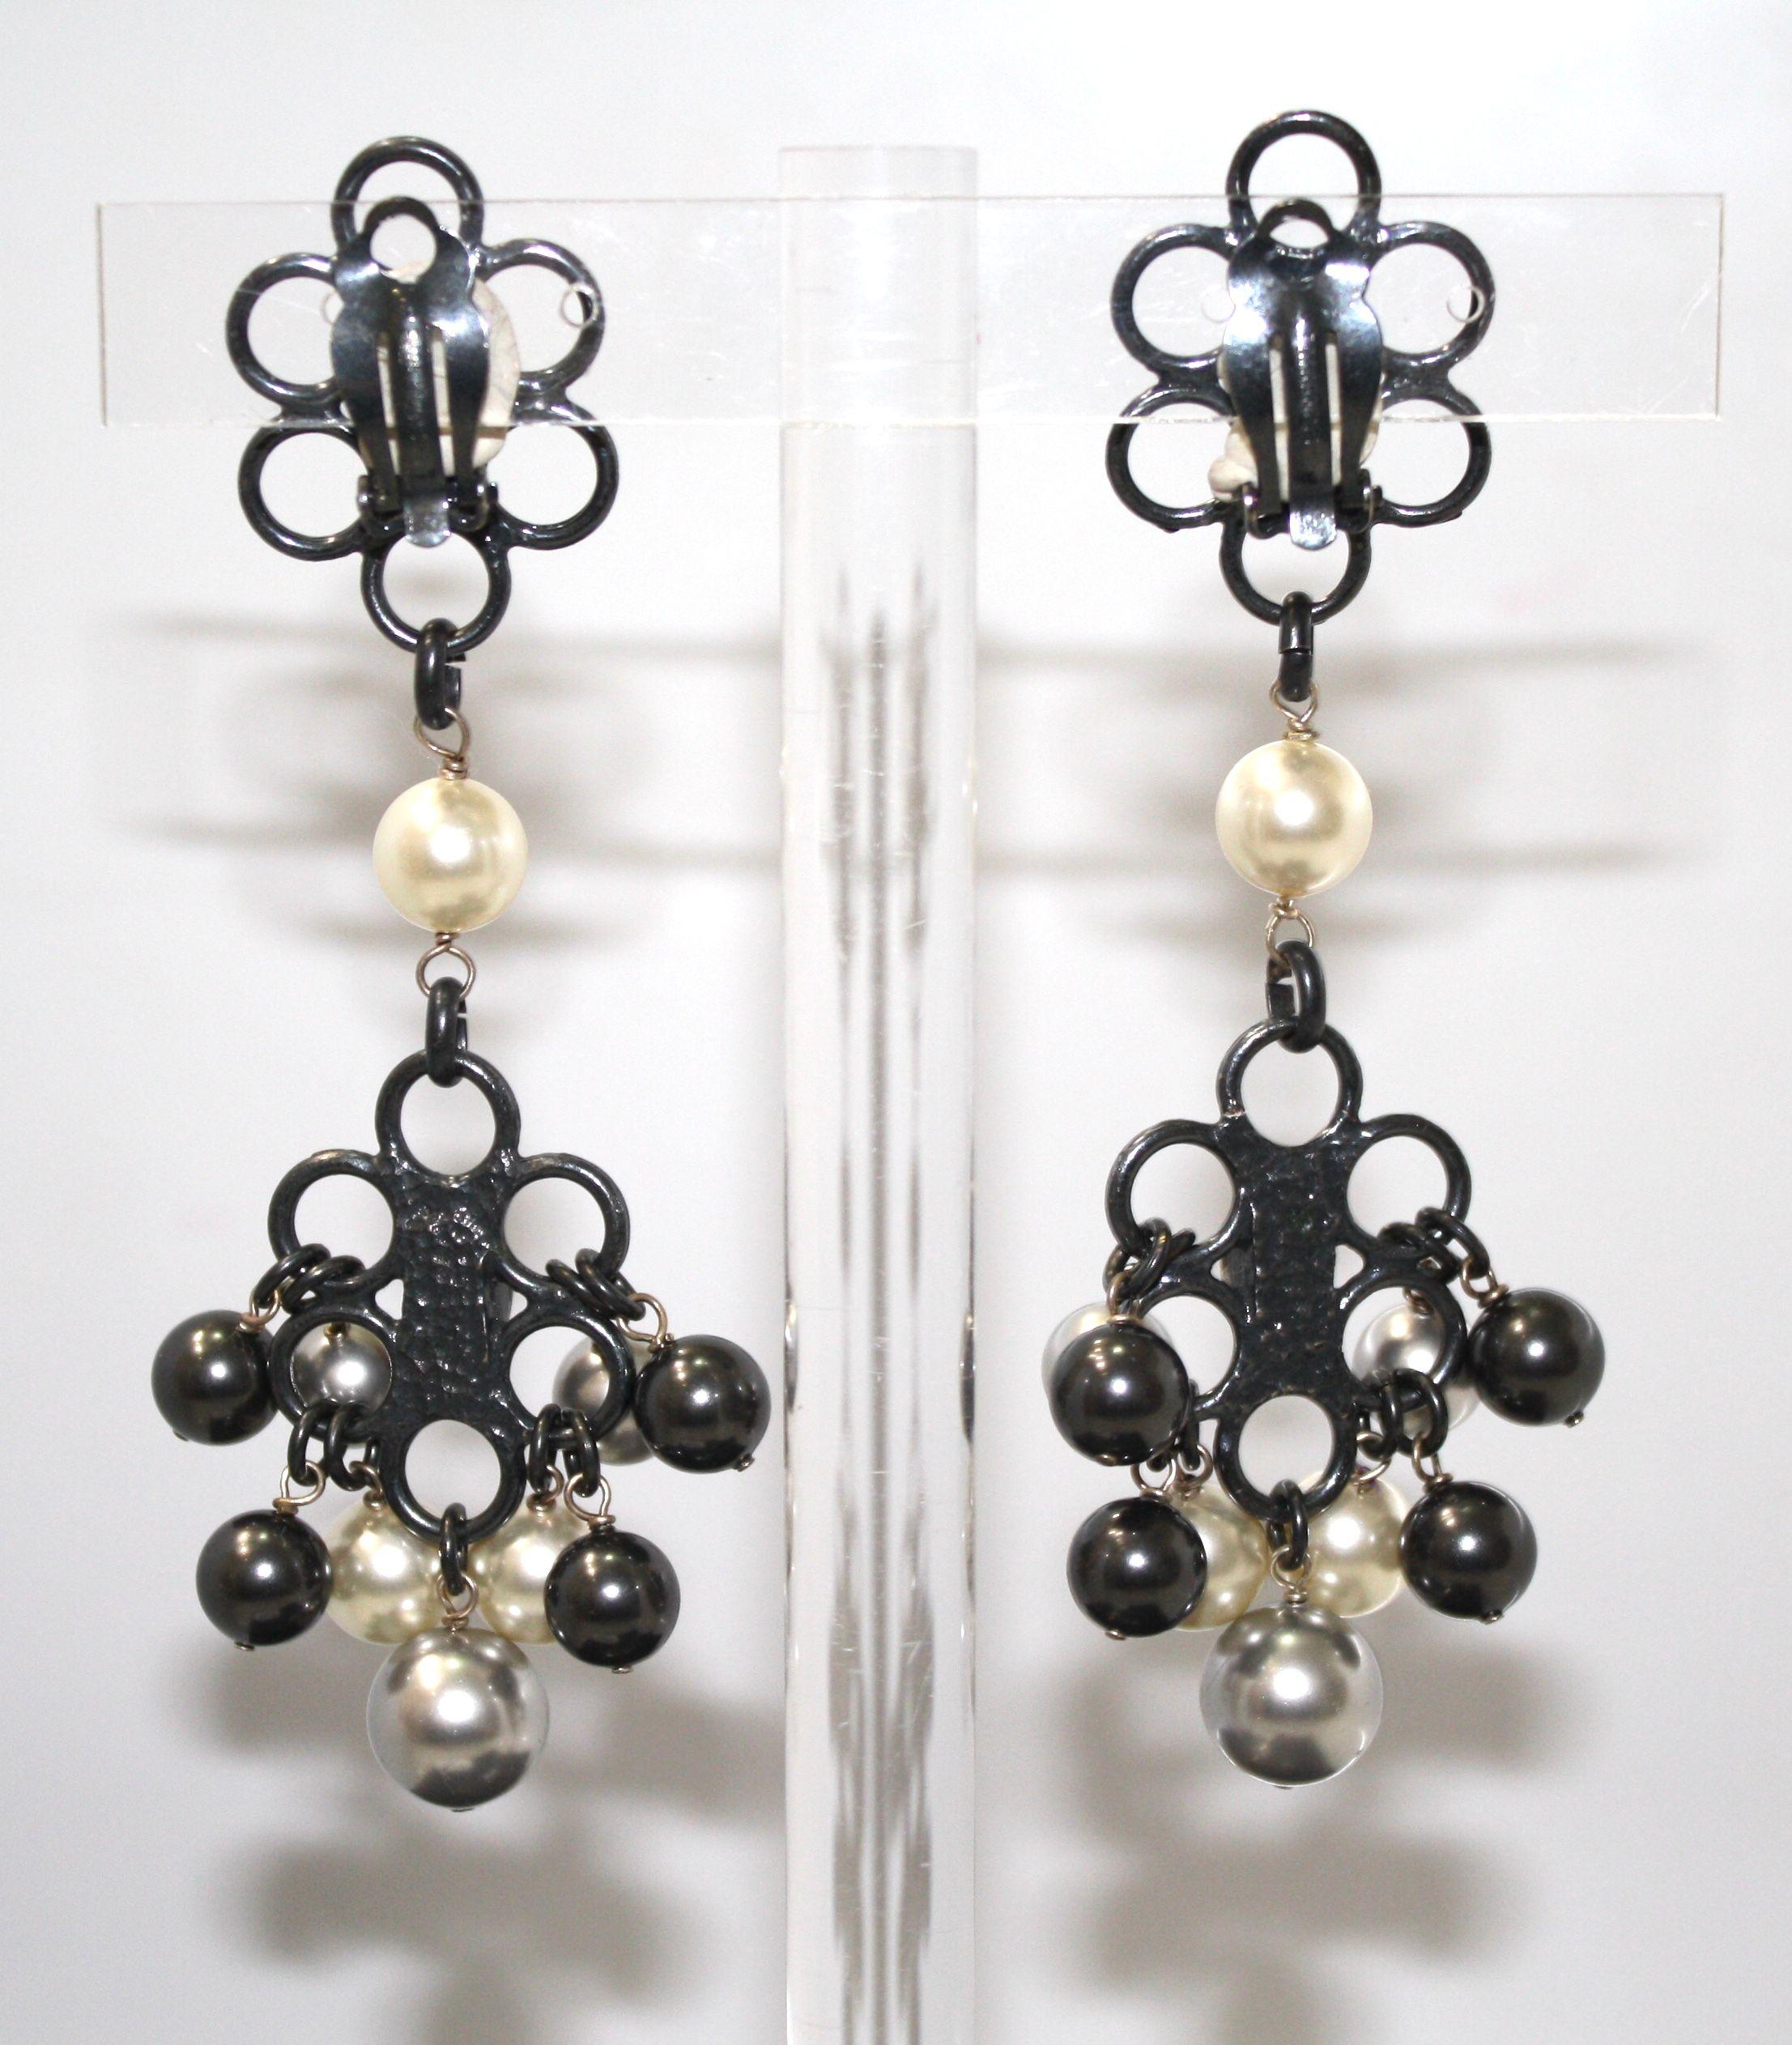 Dark rhodium with Swarovski crystals and handmade glass pearls.